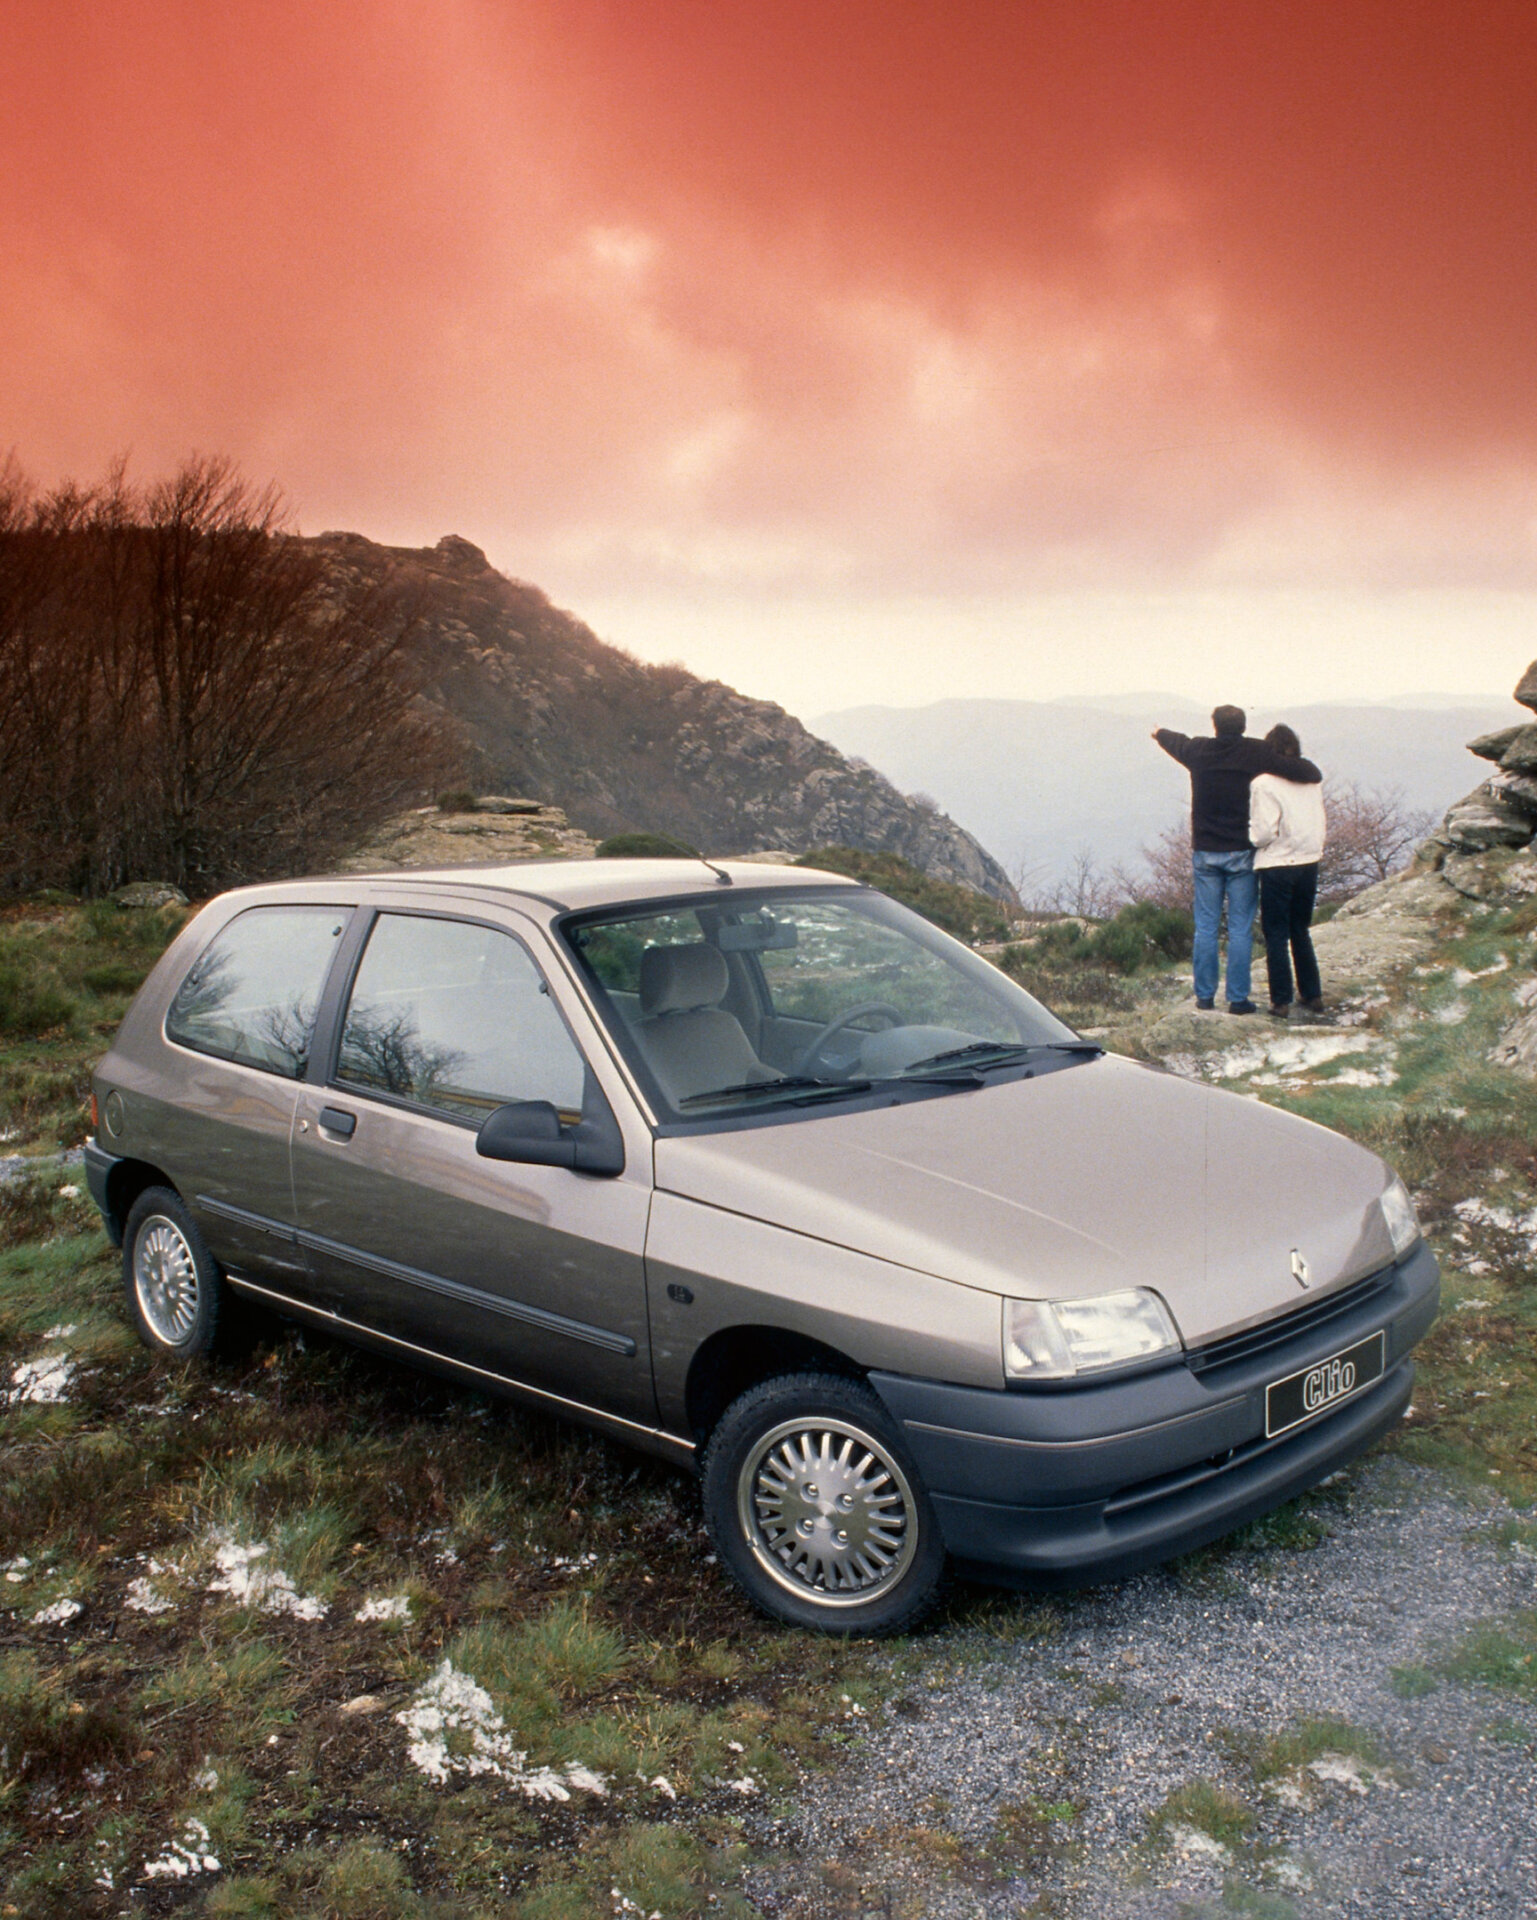 New Renault Clio premiere - renault